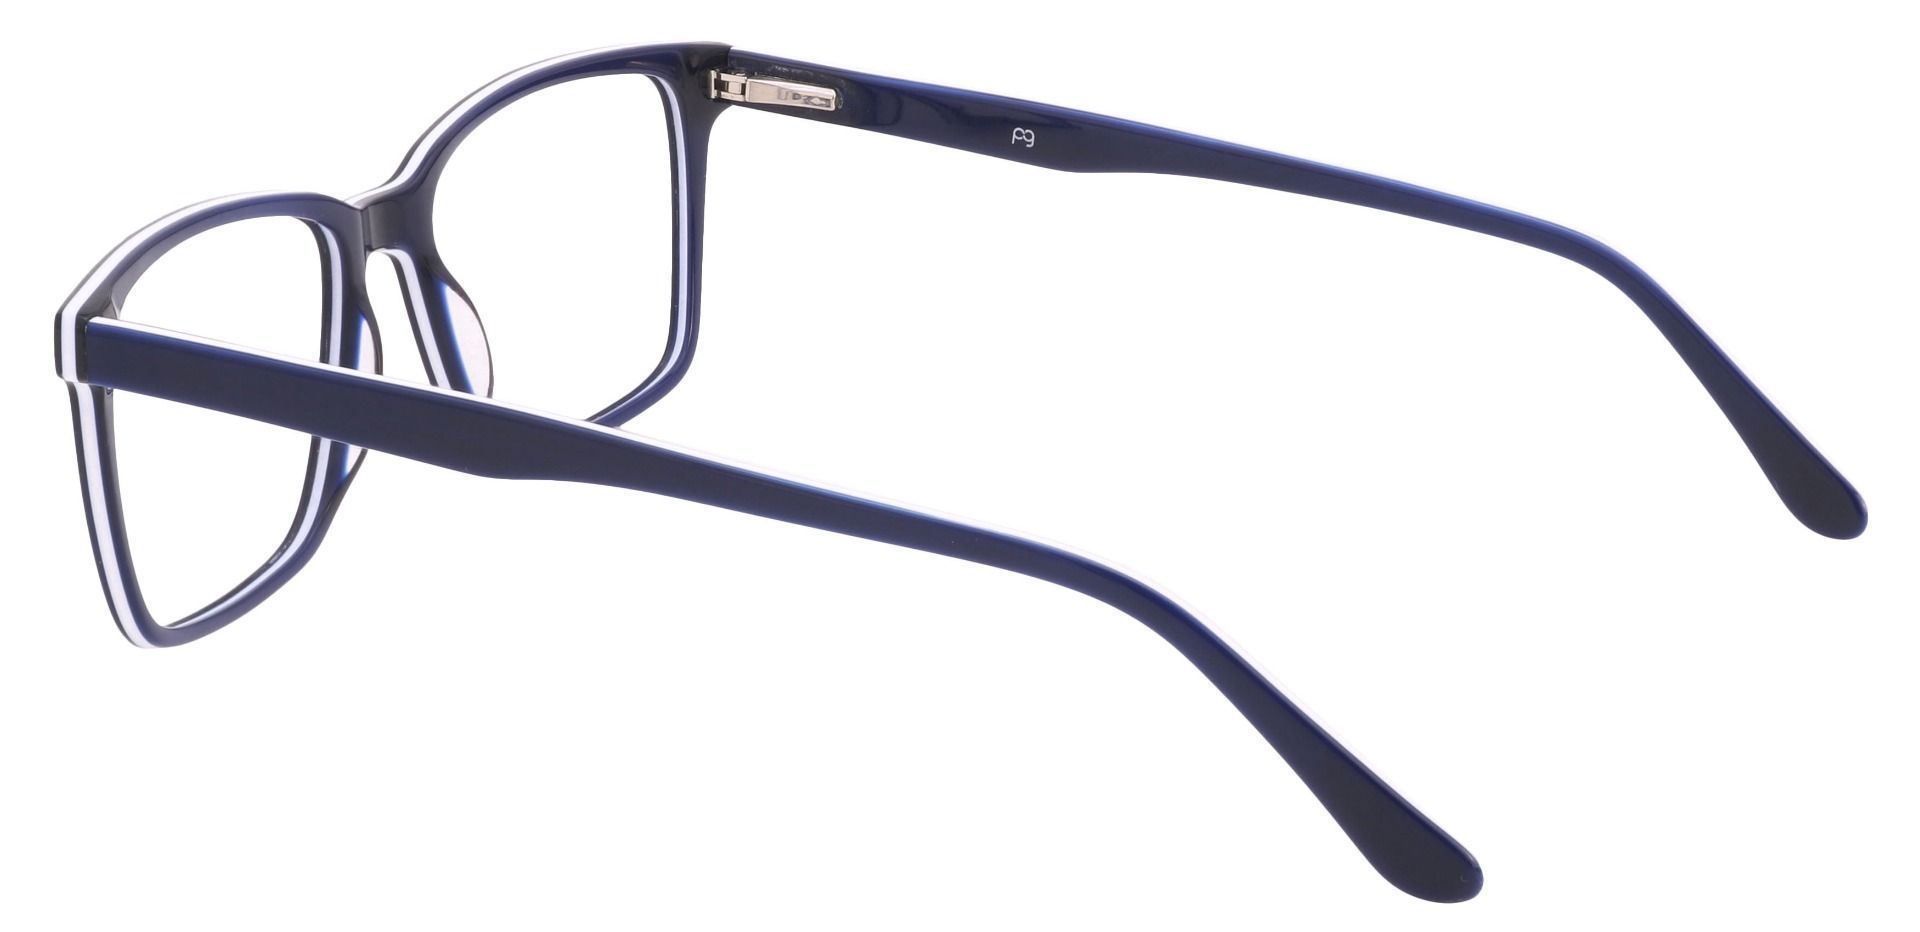 Venice Rectangle Prescription Glasses - Navy-white